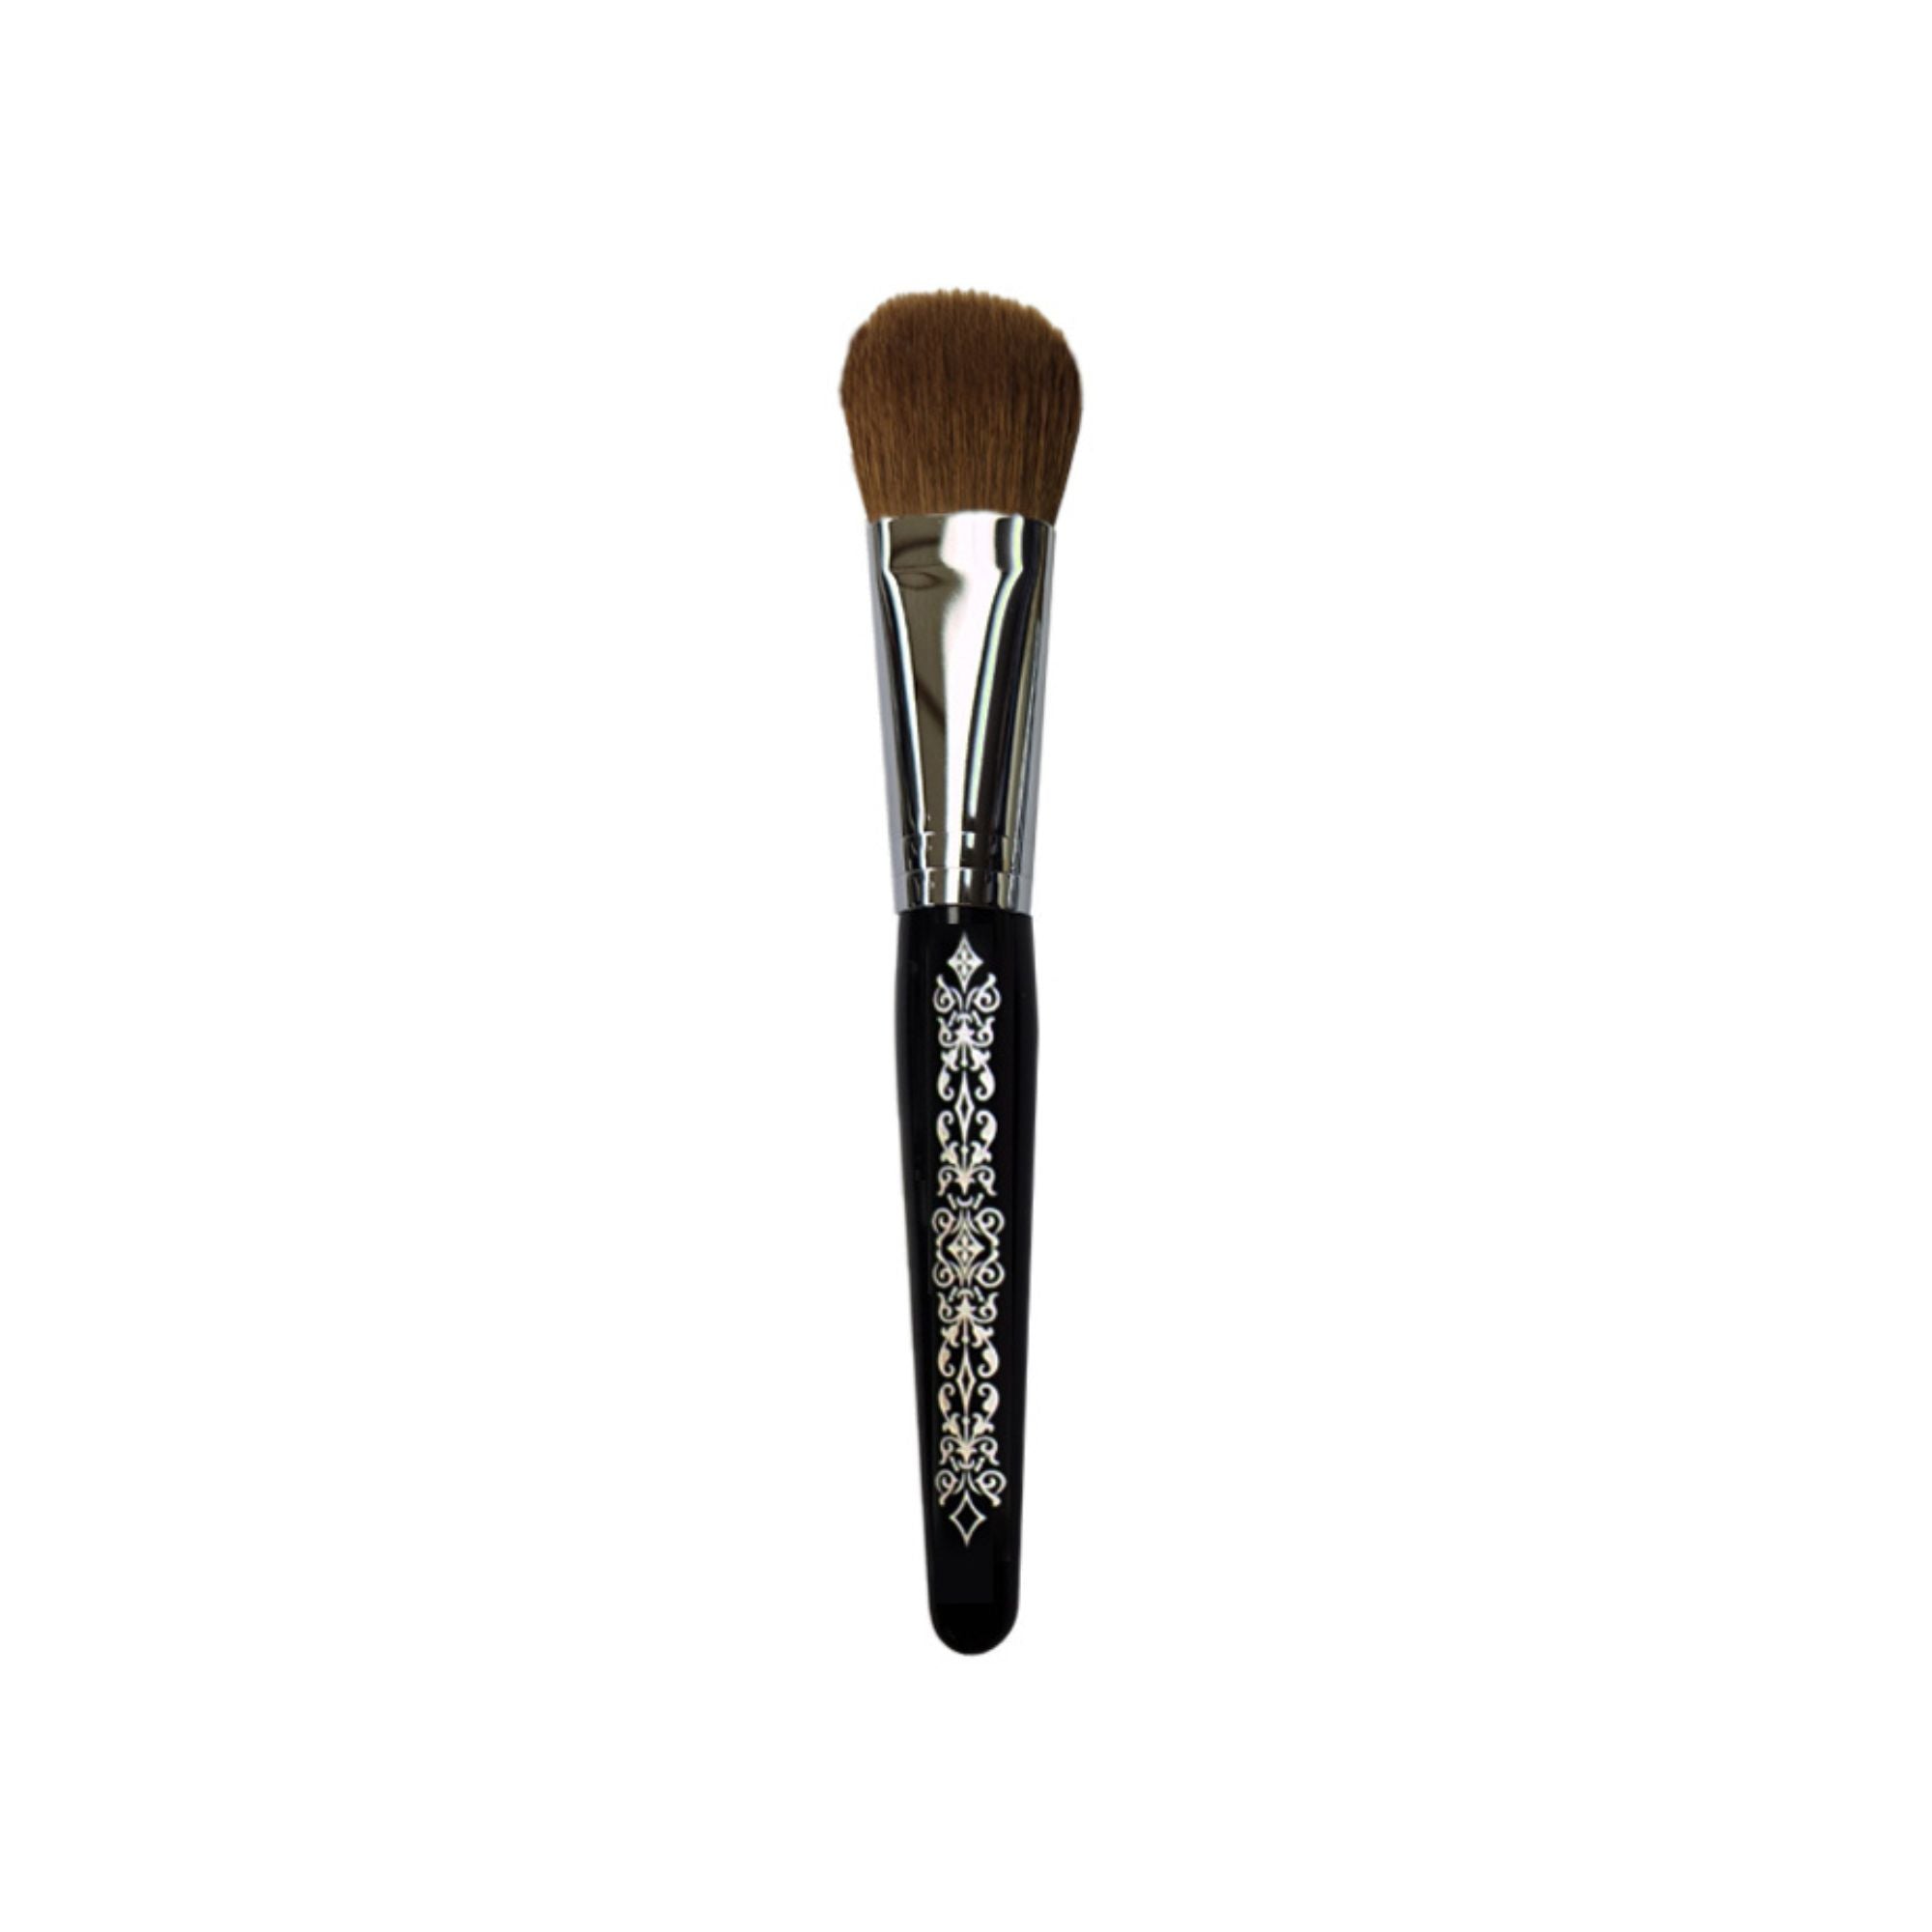 Tanseido KF 20 Liquid Foundation Brush (8cm, Curving) - Fude Beauty, Japanese Makeup Brushes